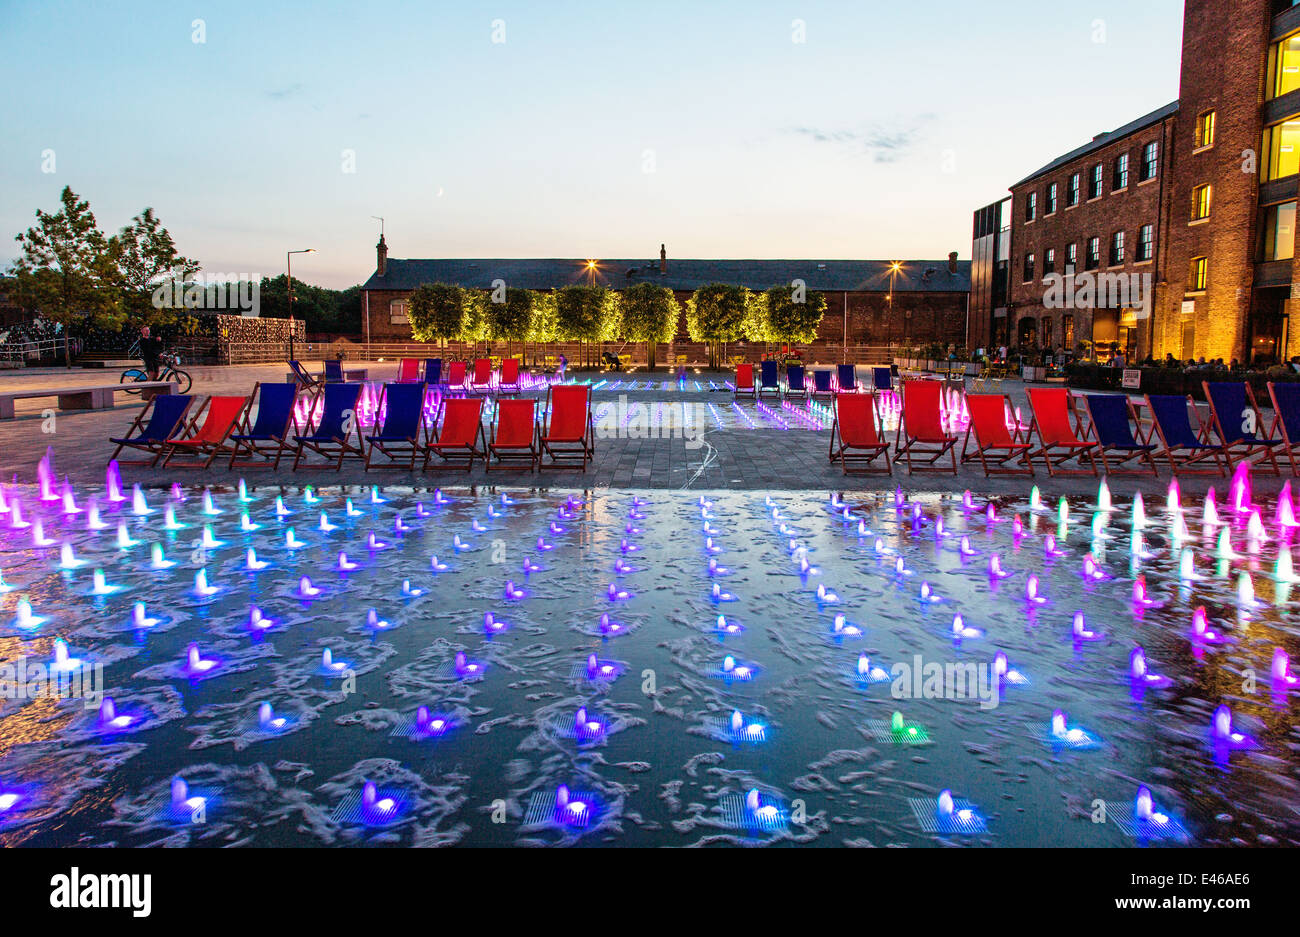 Farbige Lichter Getreidespeicher Brunnenplatz Kings Cross London UK Stockfoto